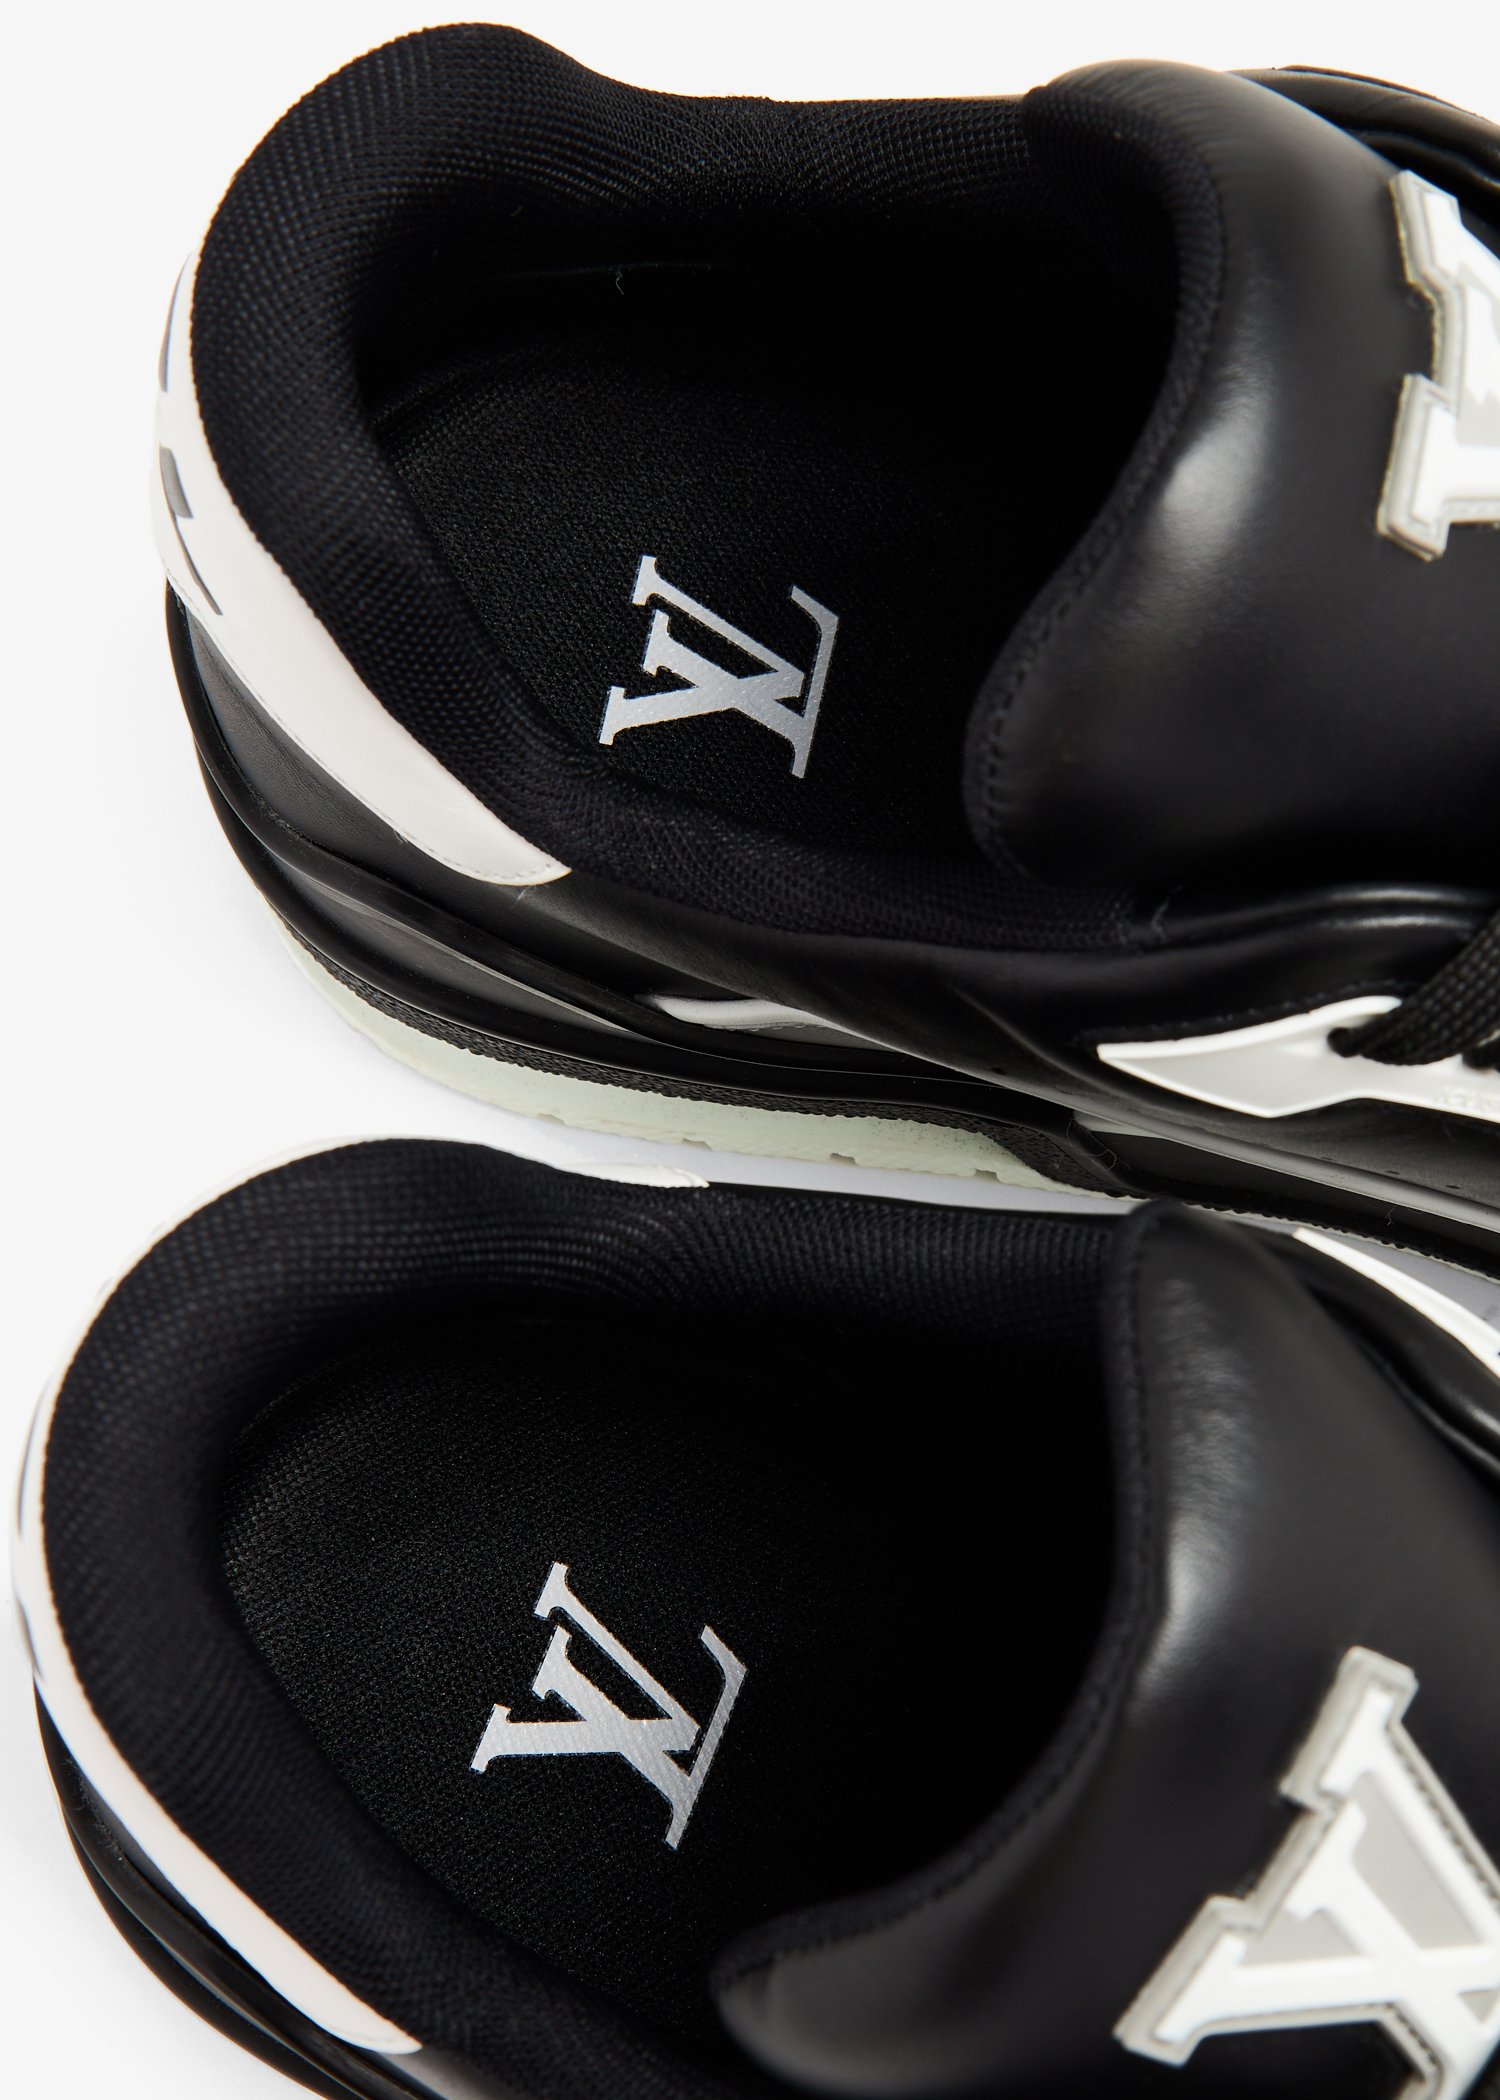 Louis Vuitton Pre-Loved LV Trainer sneakers for Men - White in KSA